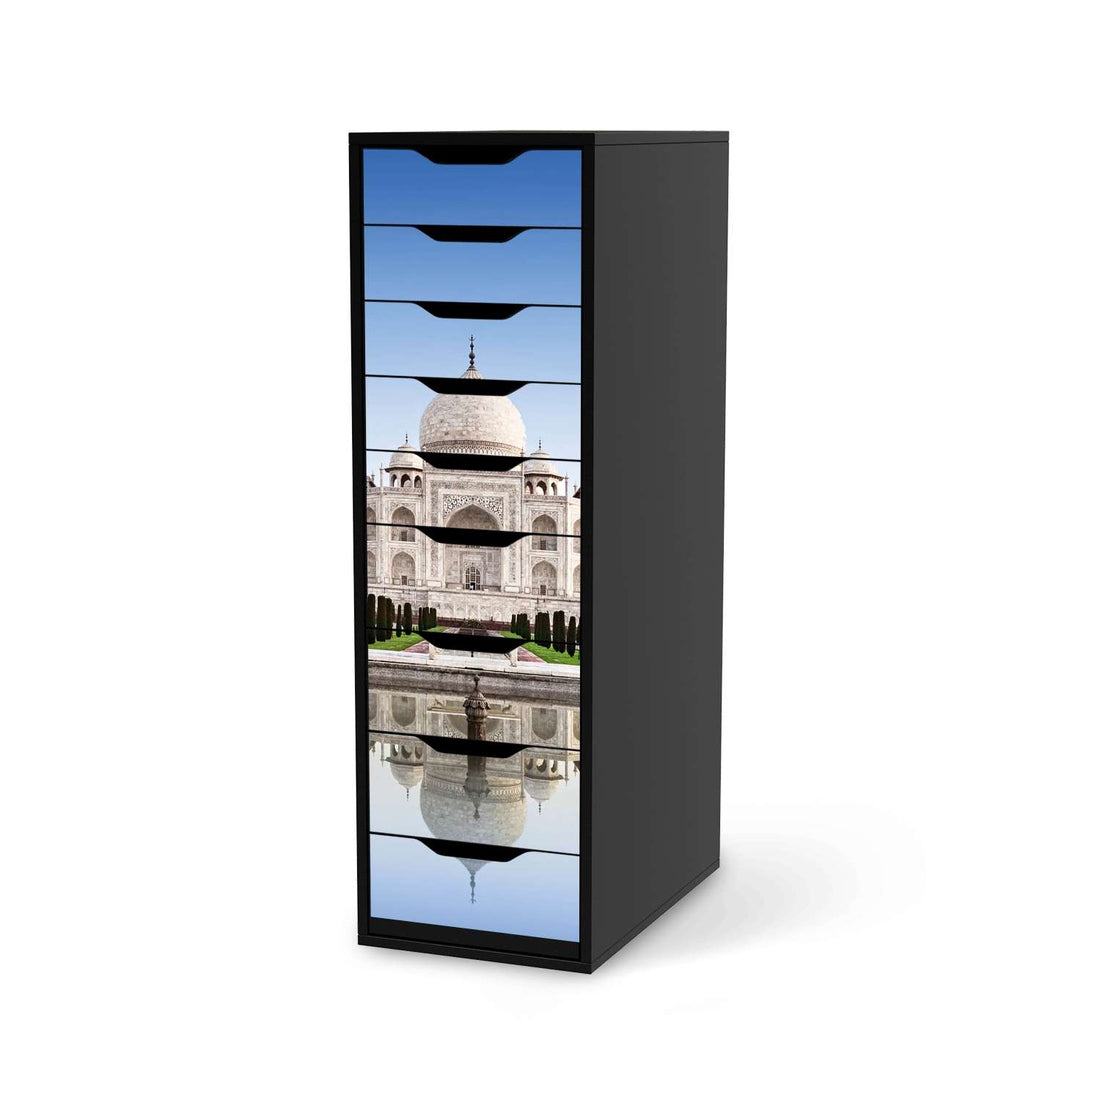 Folie für Möbel Taj Mahal - IKEA Alex 9 Schubladen - schwarz